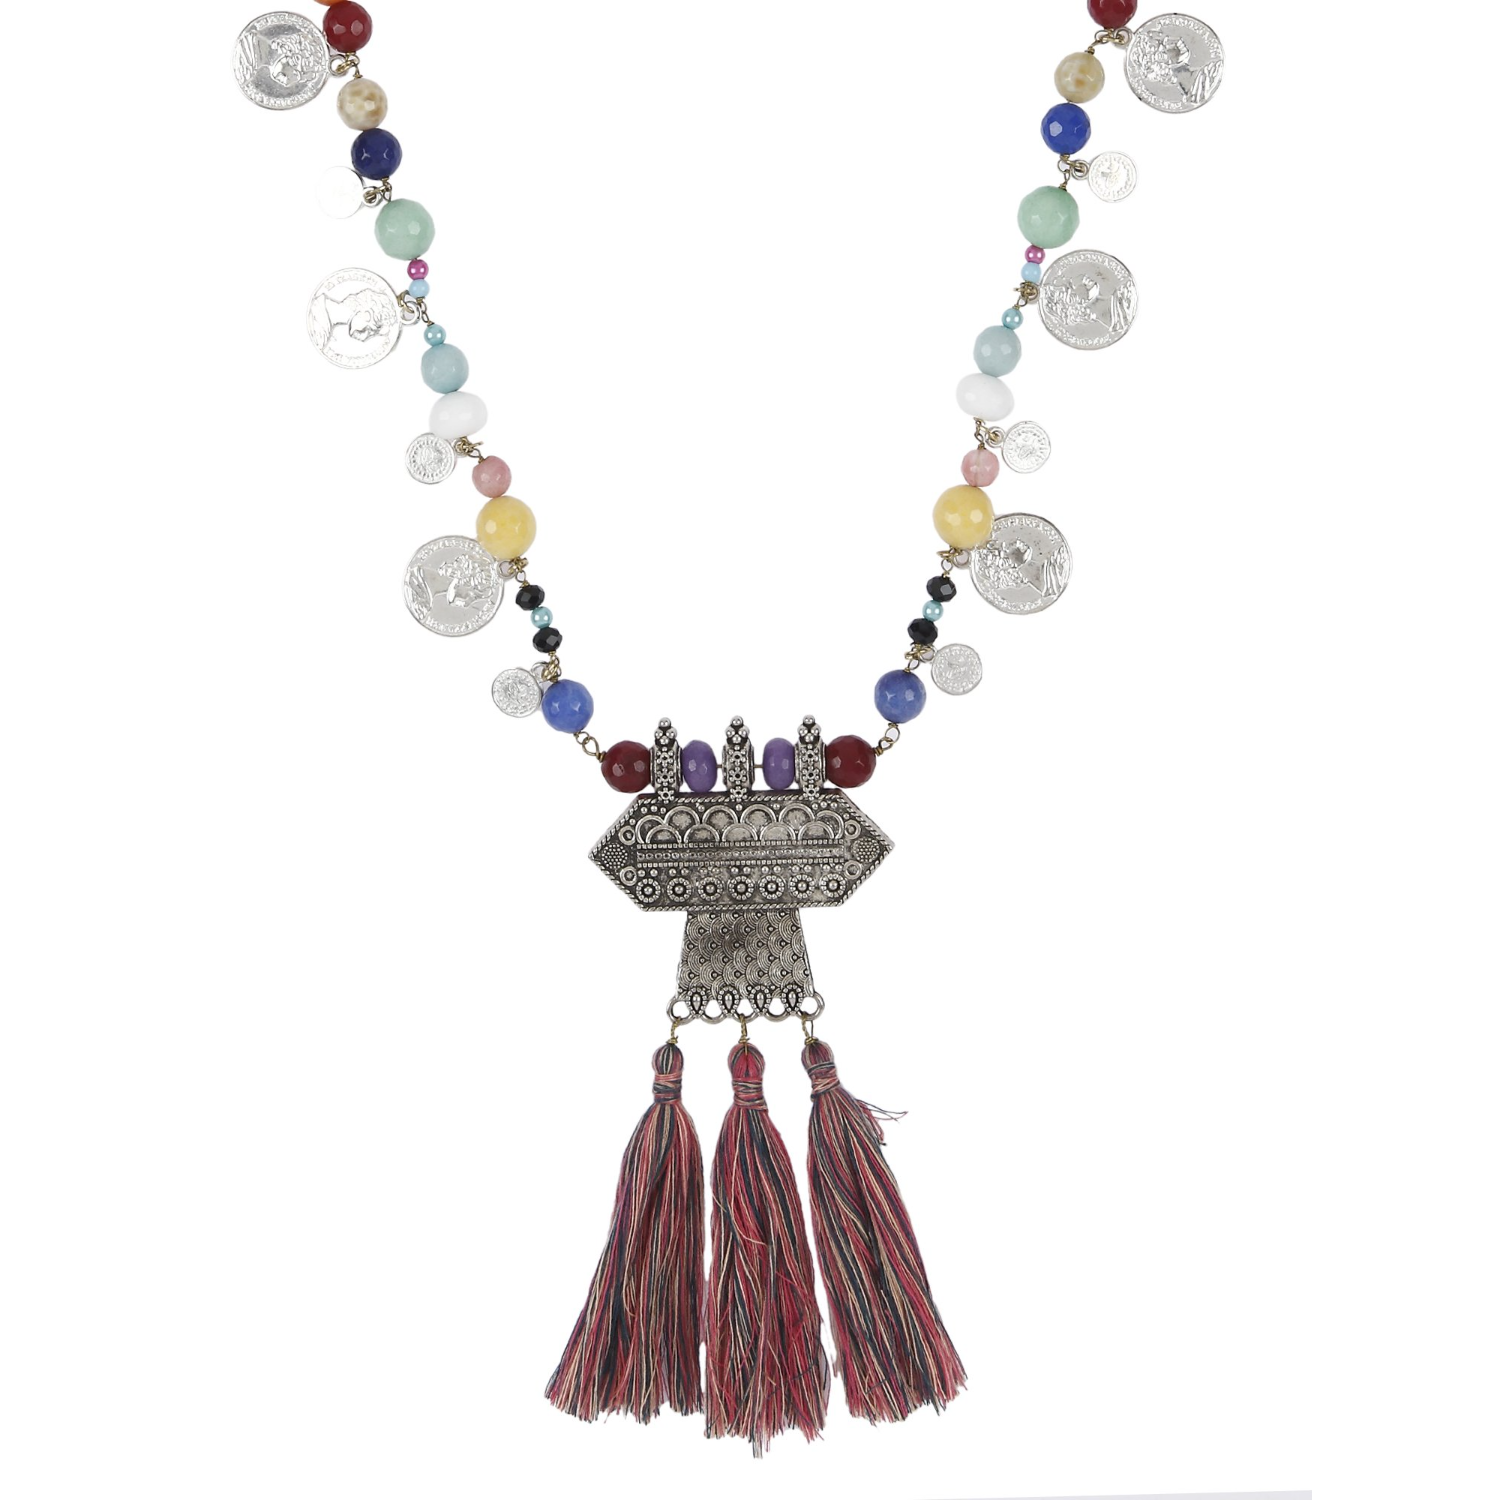 Boho bead necklace